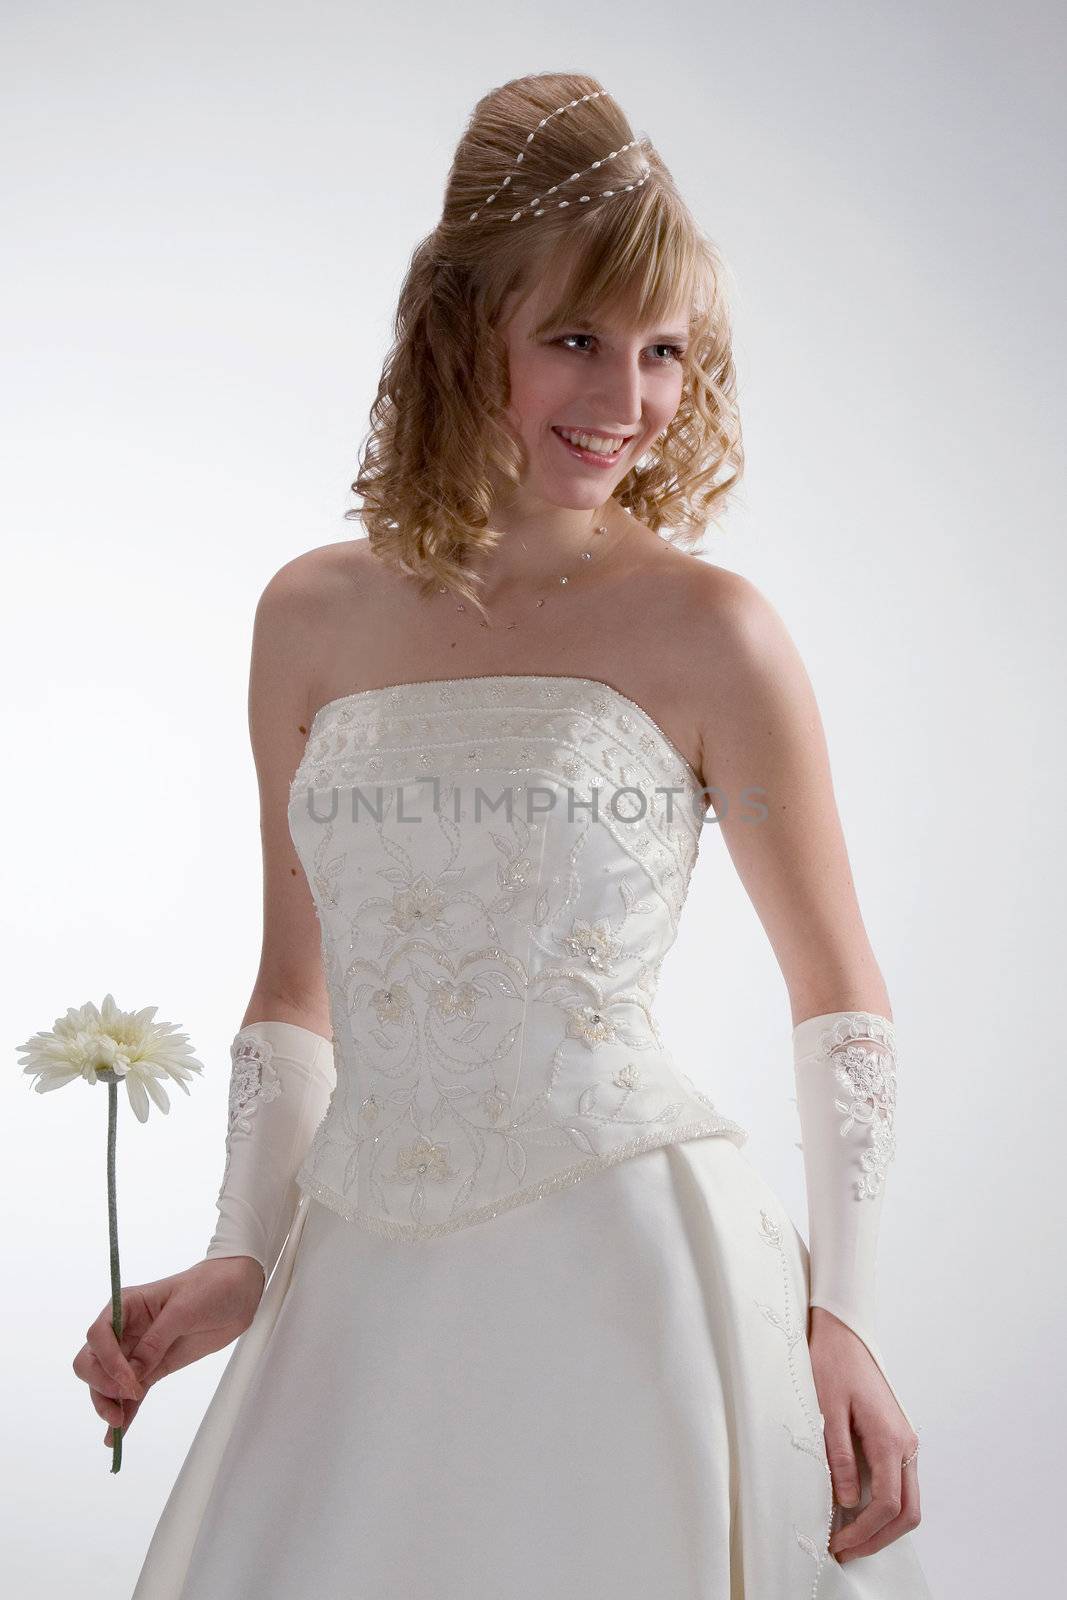 Beautiful bride in white dress 2. by fotorobs